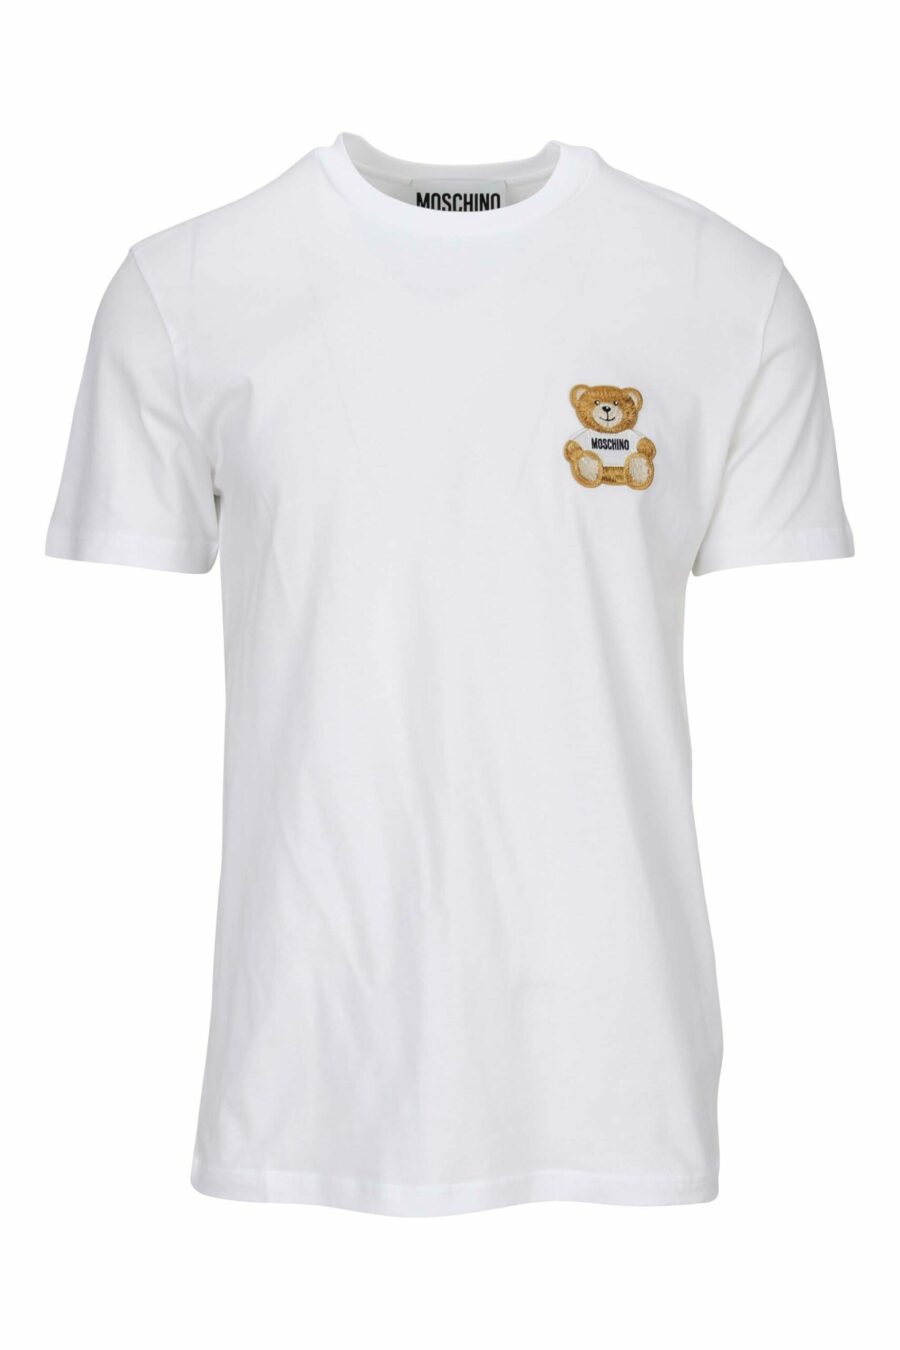 Camiseta blanca con minilogo "teddy" bordado - 667113455334 scaled